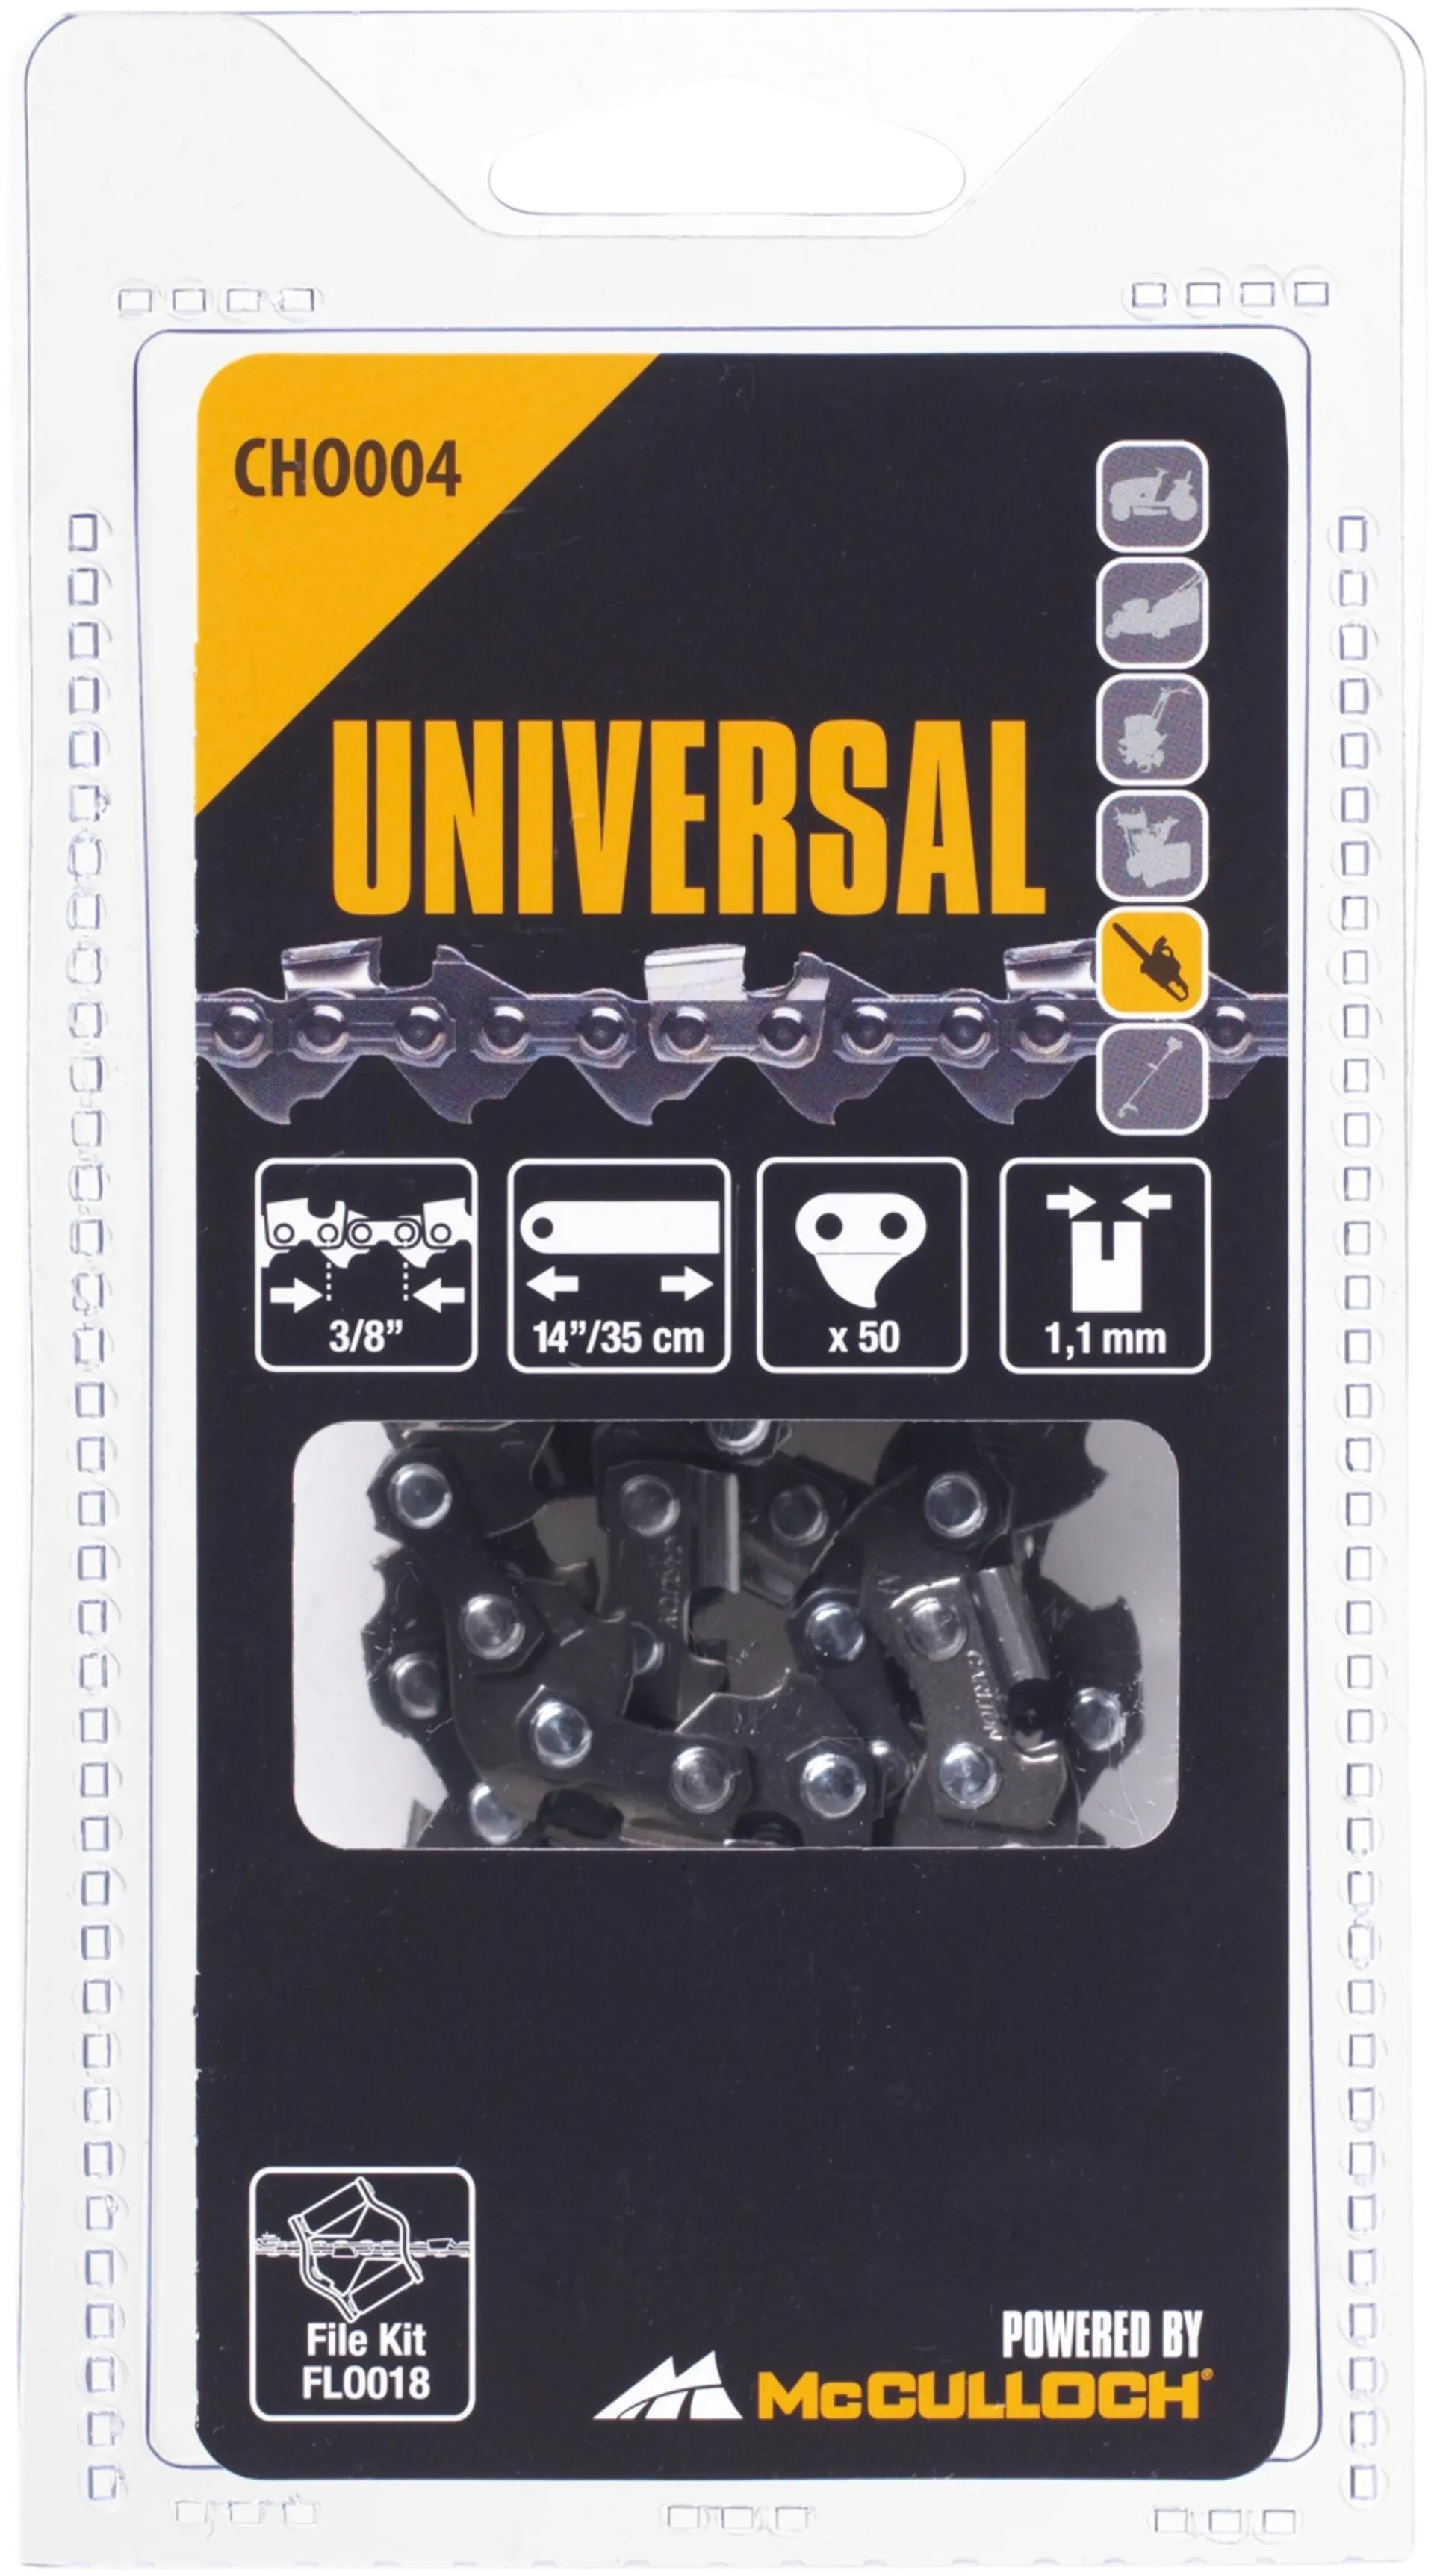 Teräketju Universal 14-50 3/8 1,1 Cho004